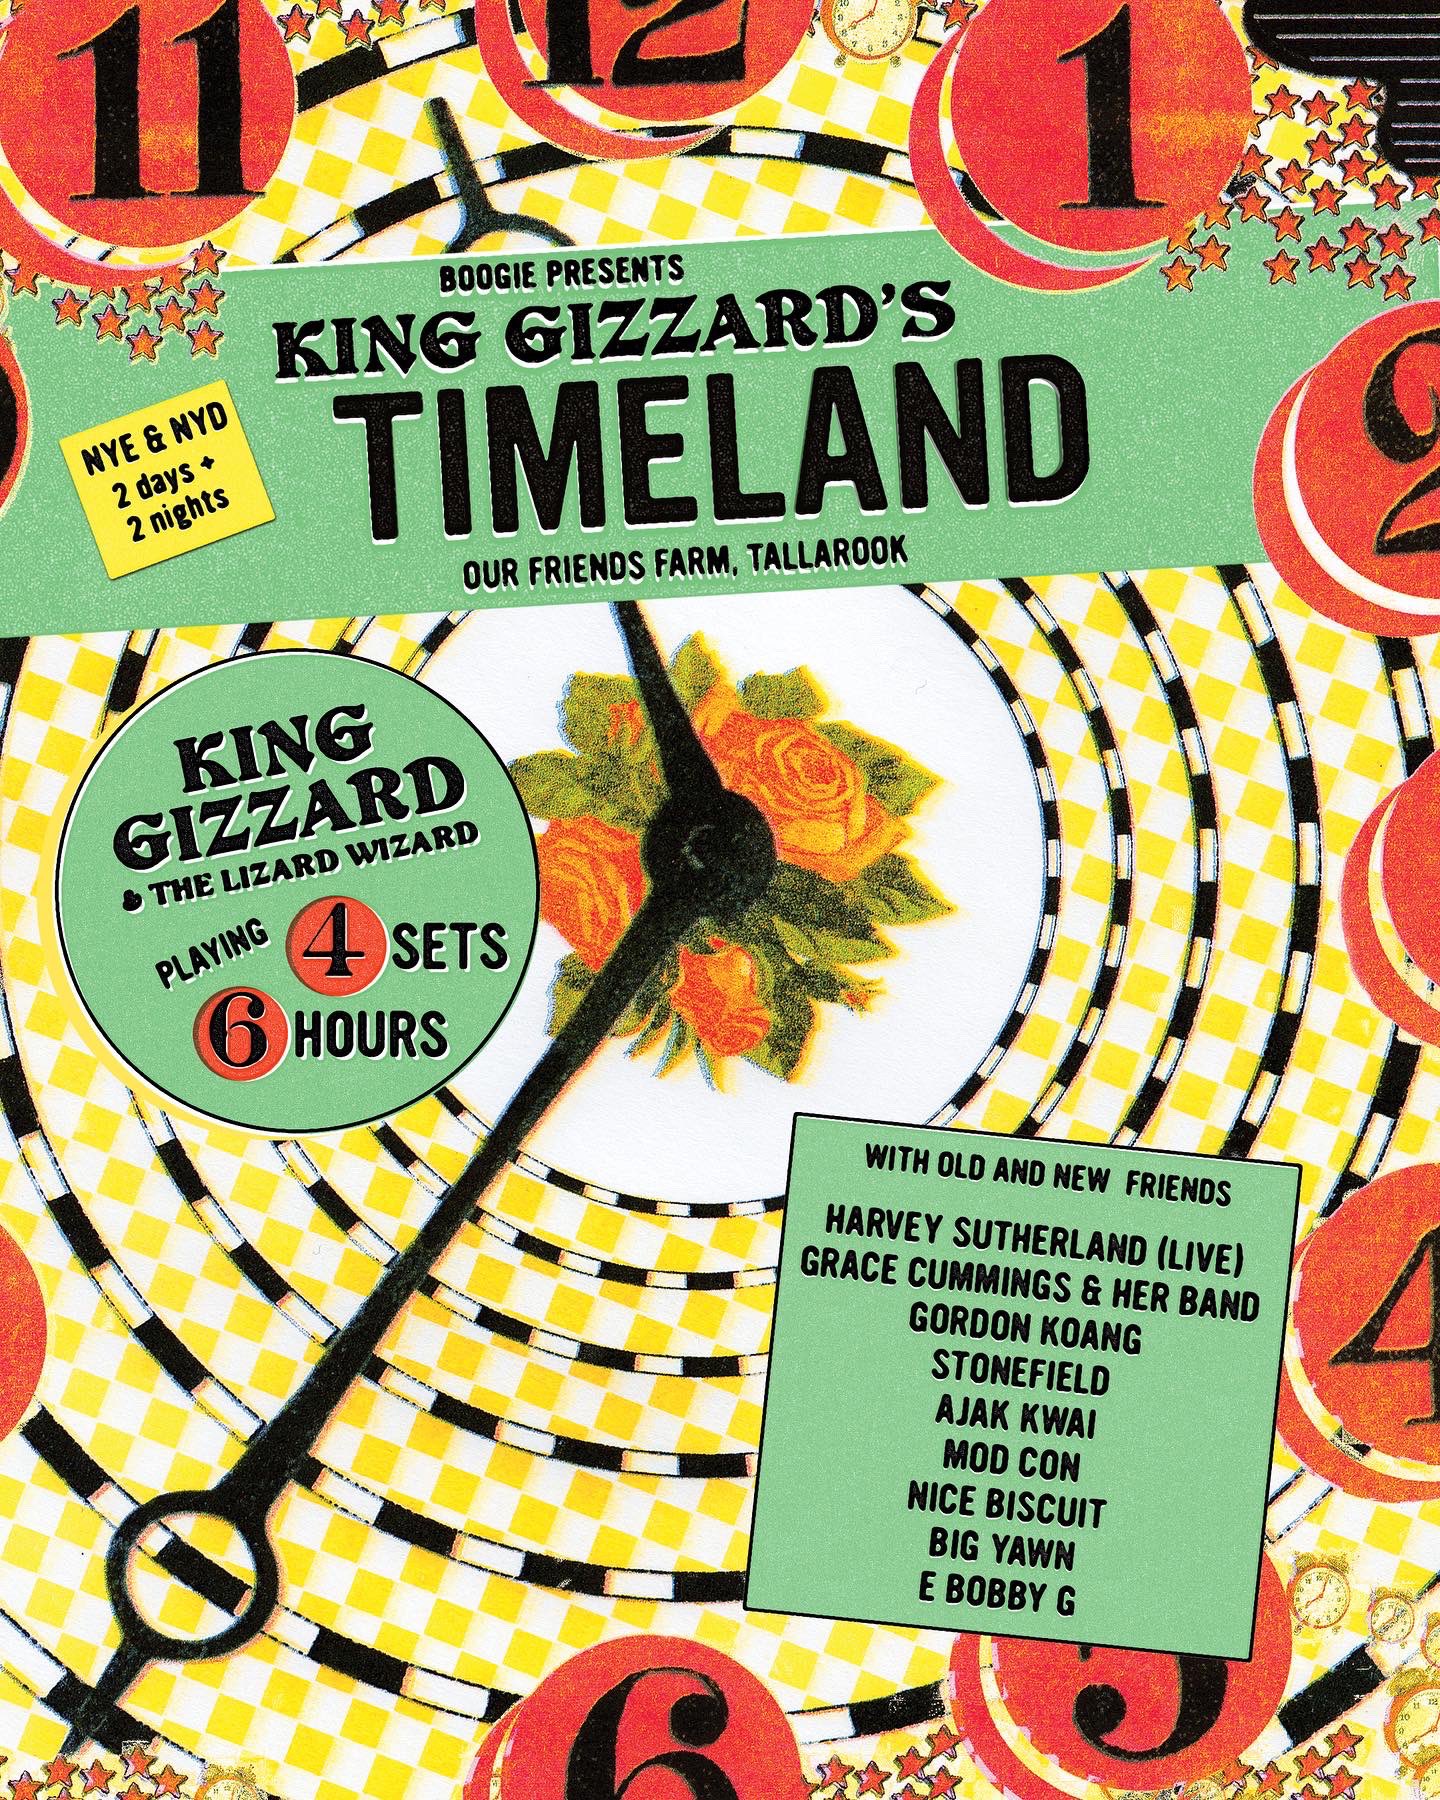 King Gizzard WHATTTT?!? Tix on sale midday tomorrow xo